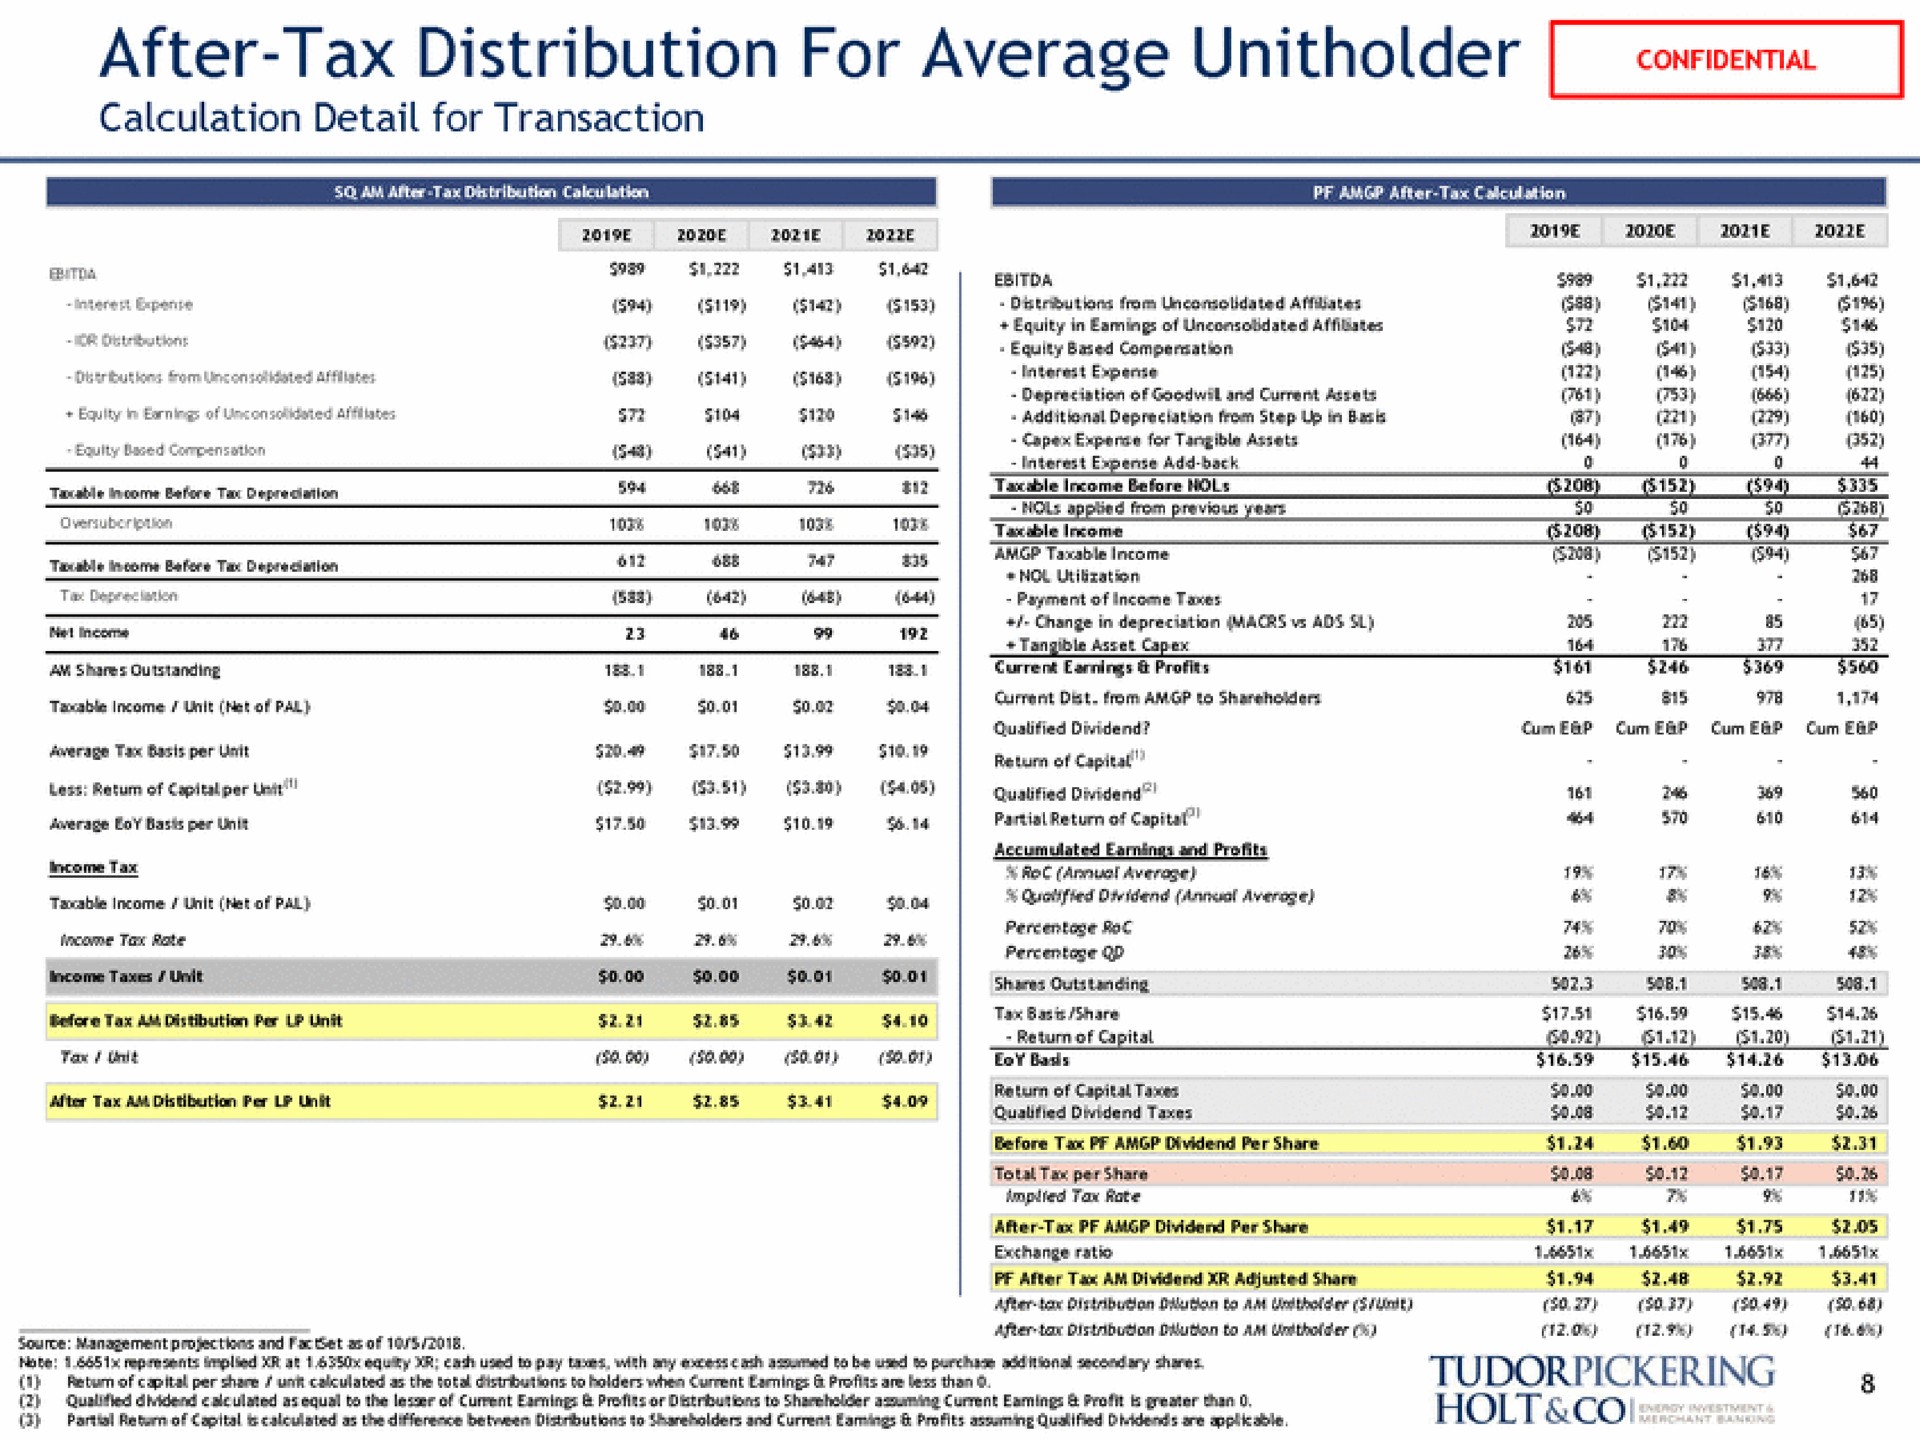 after tax distribution for average | Tudor, Pickering, Holt & Co